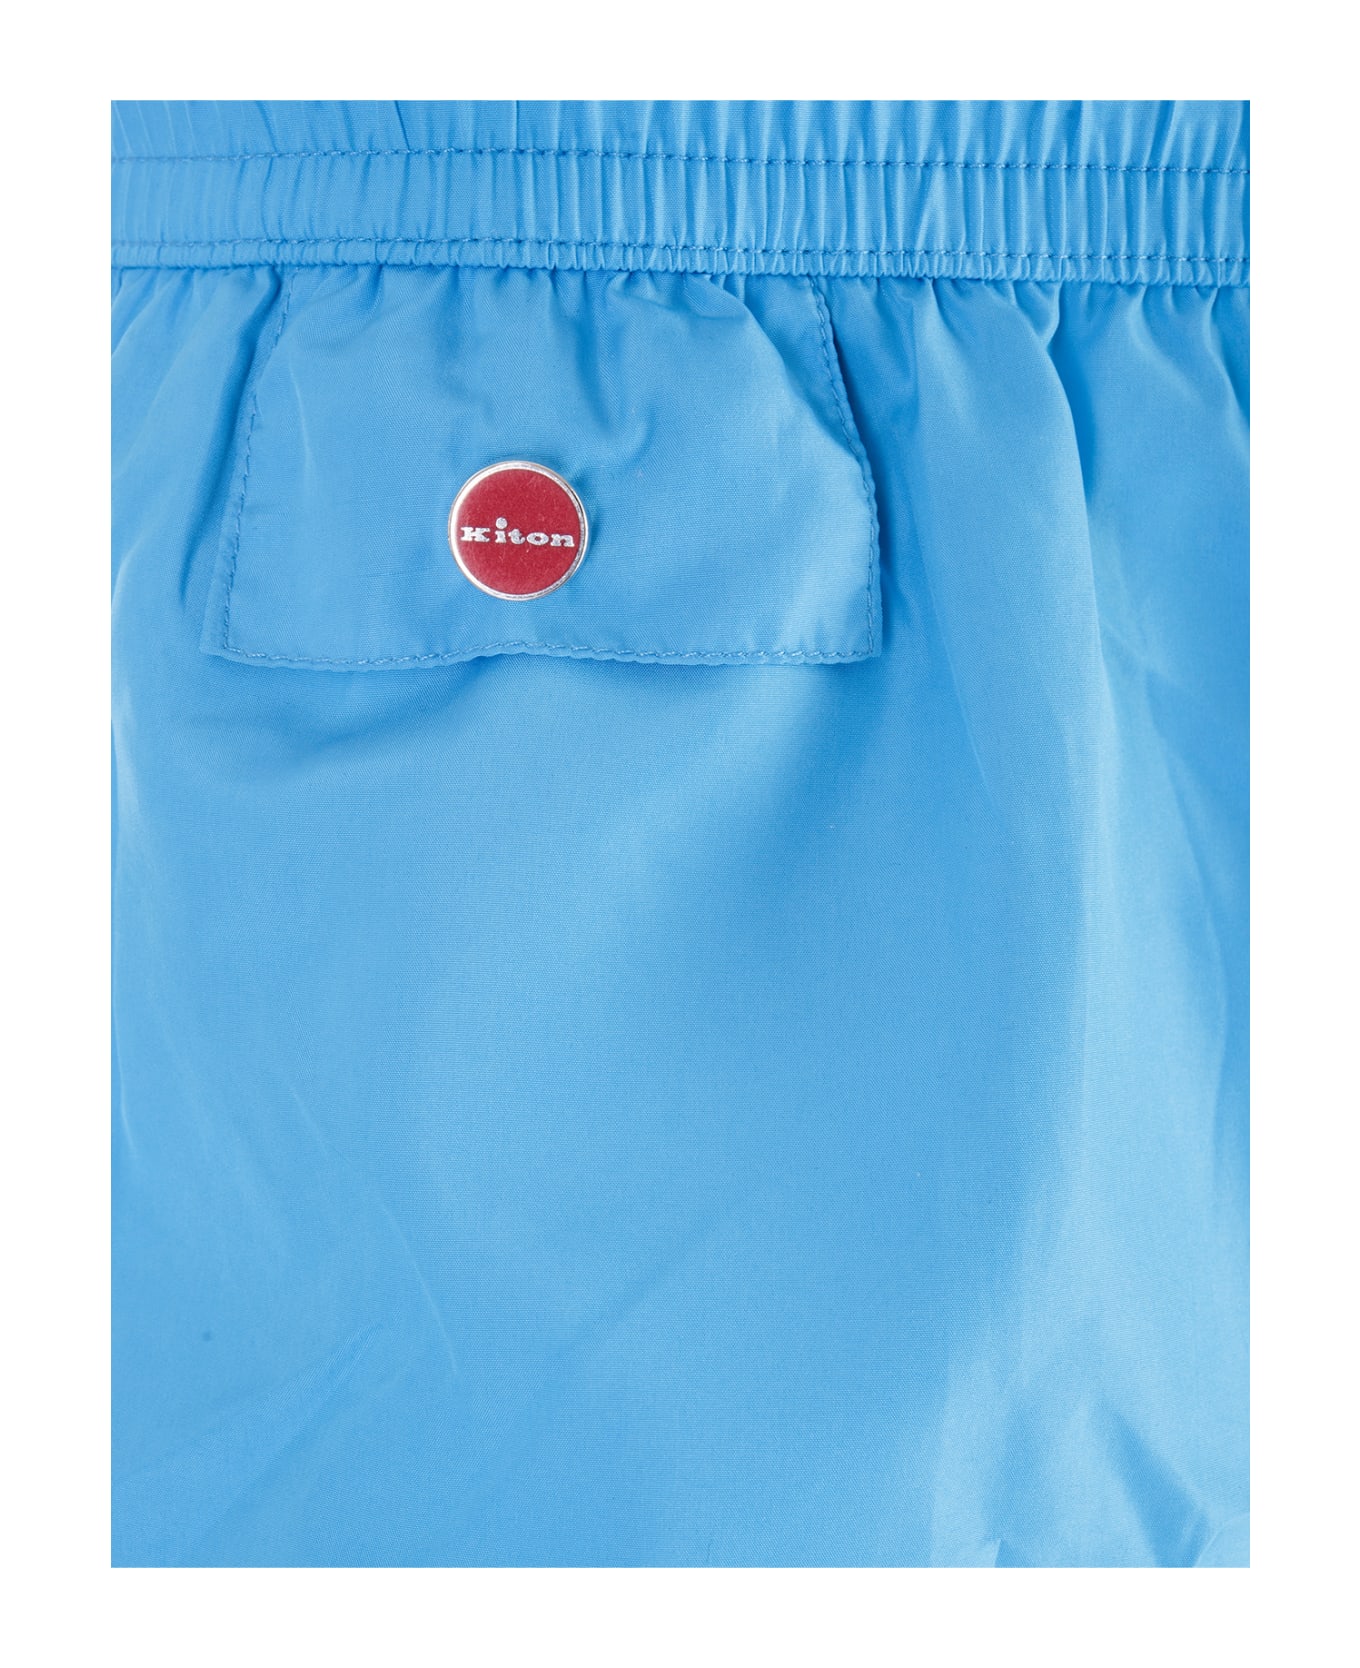 Kiton Sky Blue Swim Shorts - Blue